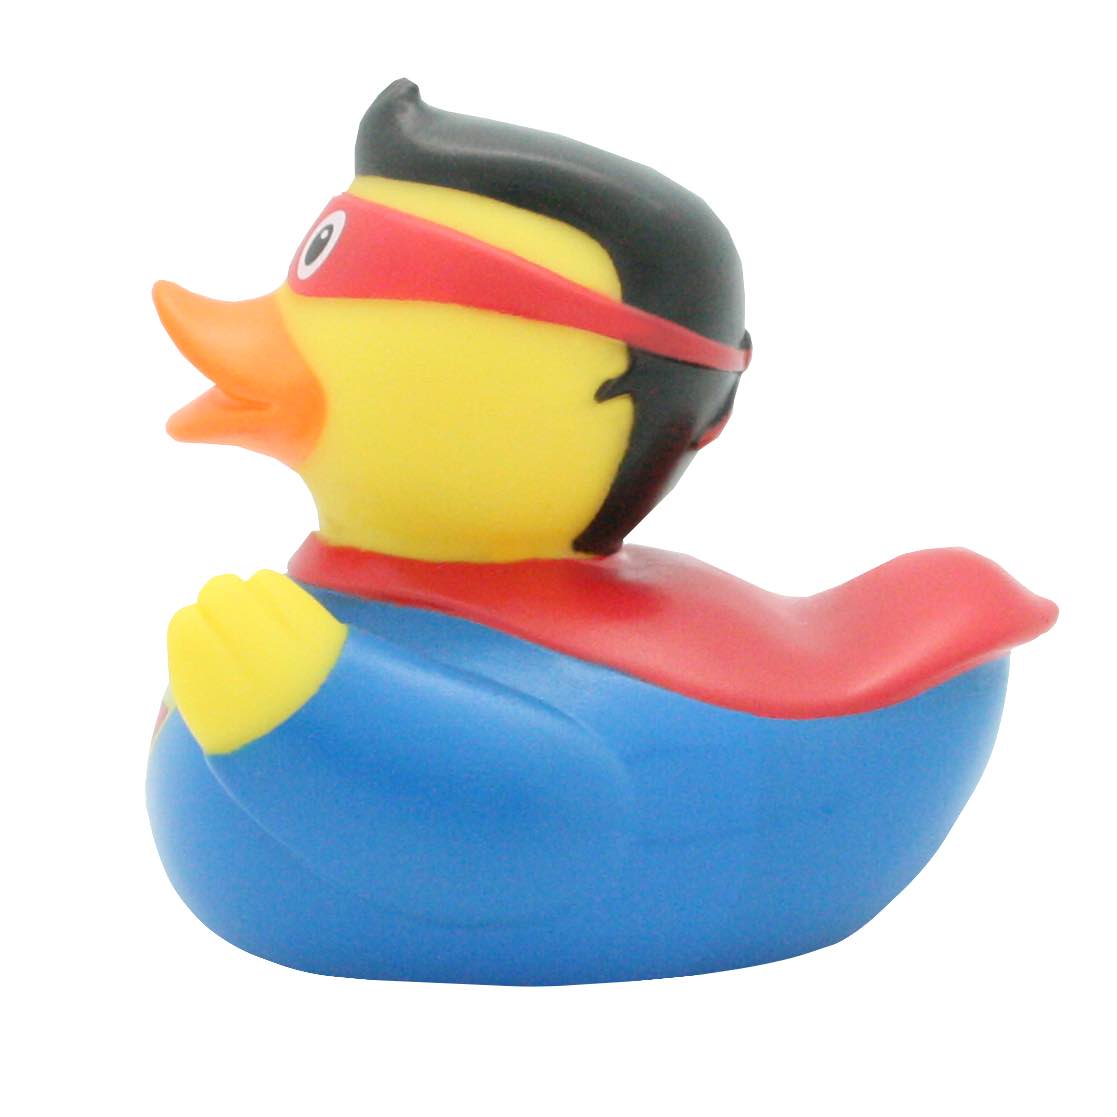 Superhero Rubber Duck . | Buy premium rubber ducks online - world wide ...